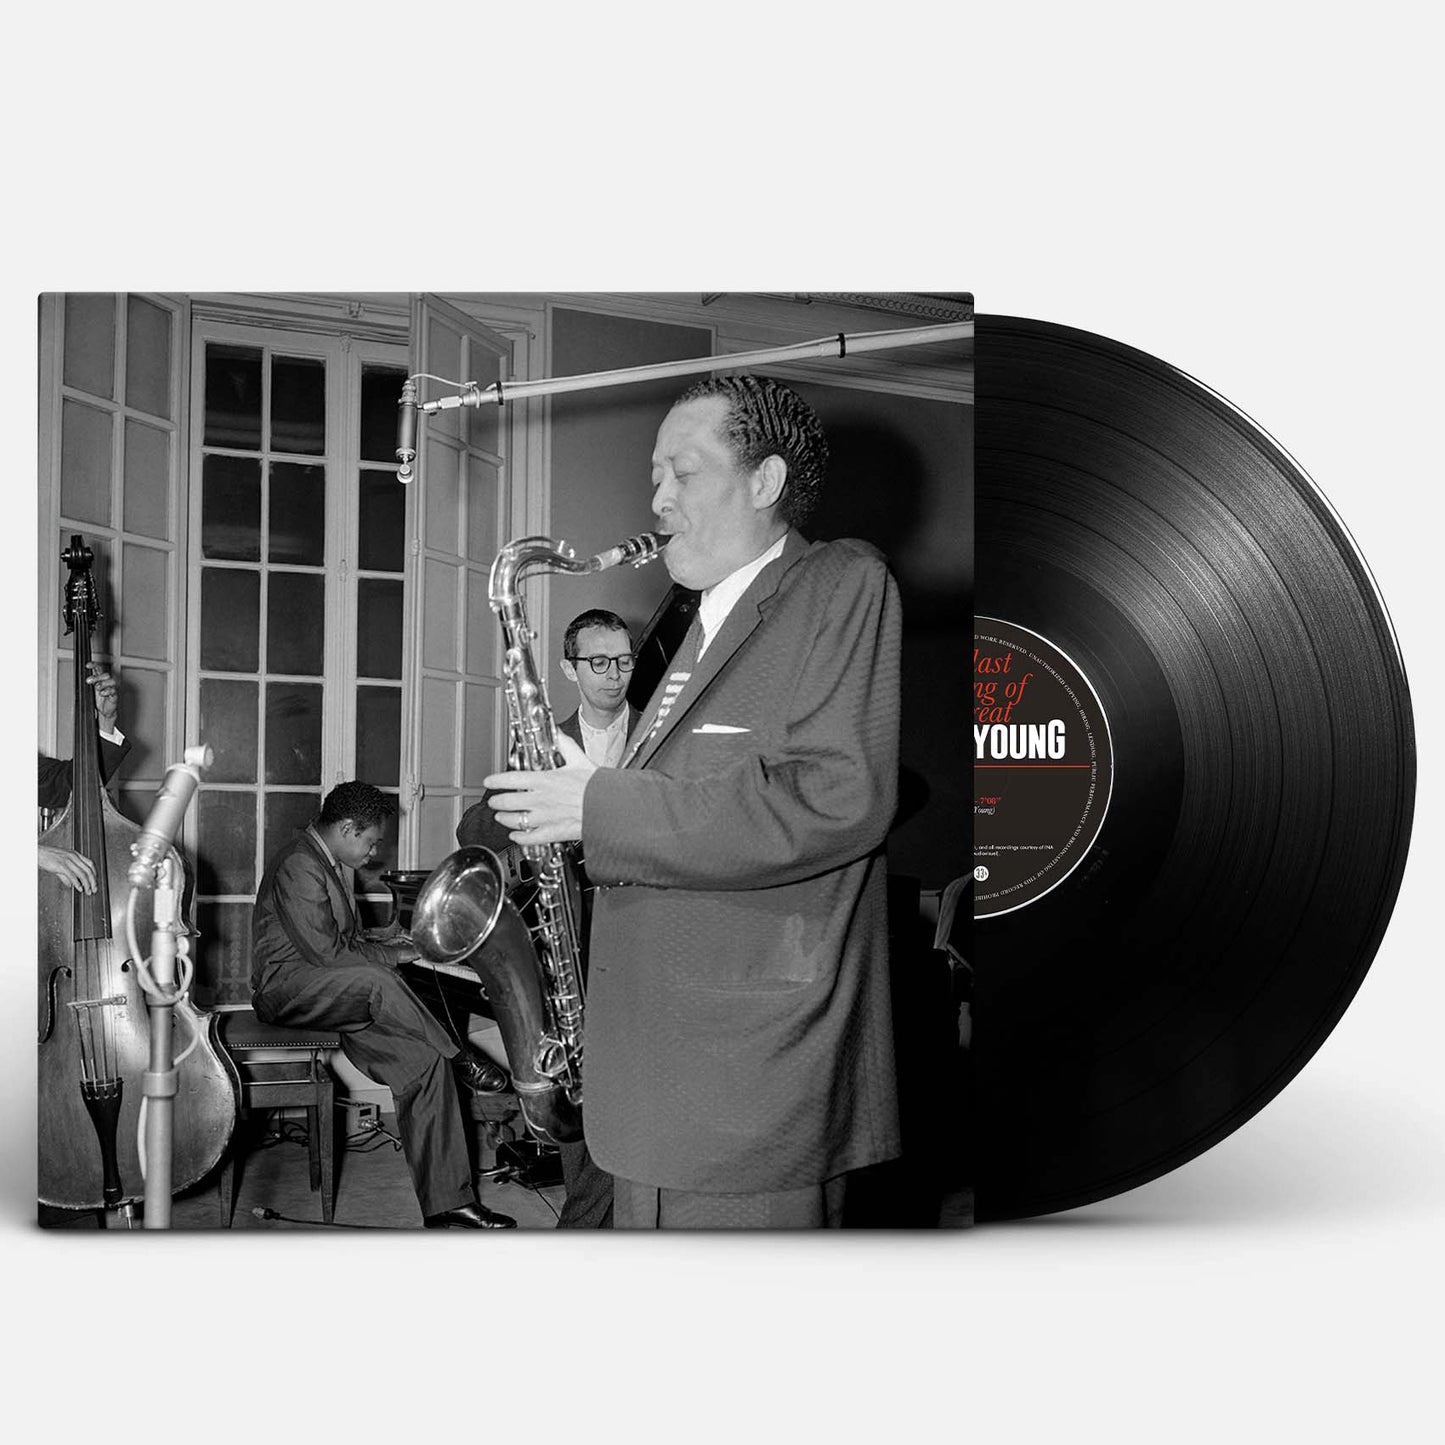 Lester Young – Le Dernier Message de Lester Young Barclay – Sam Records LP + 10 Zoll